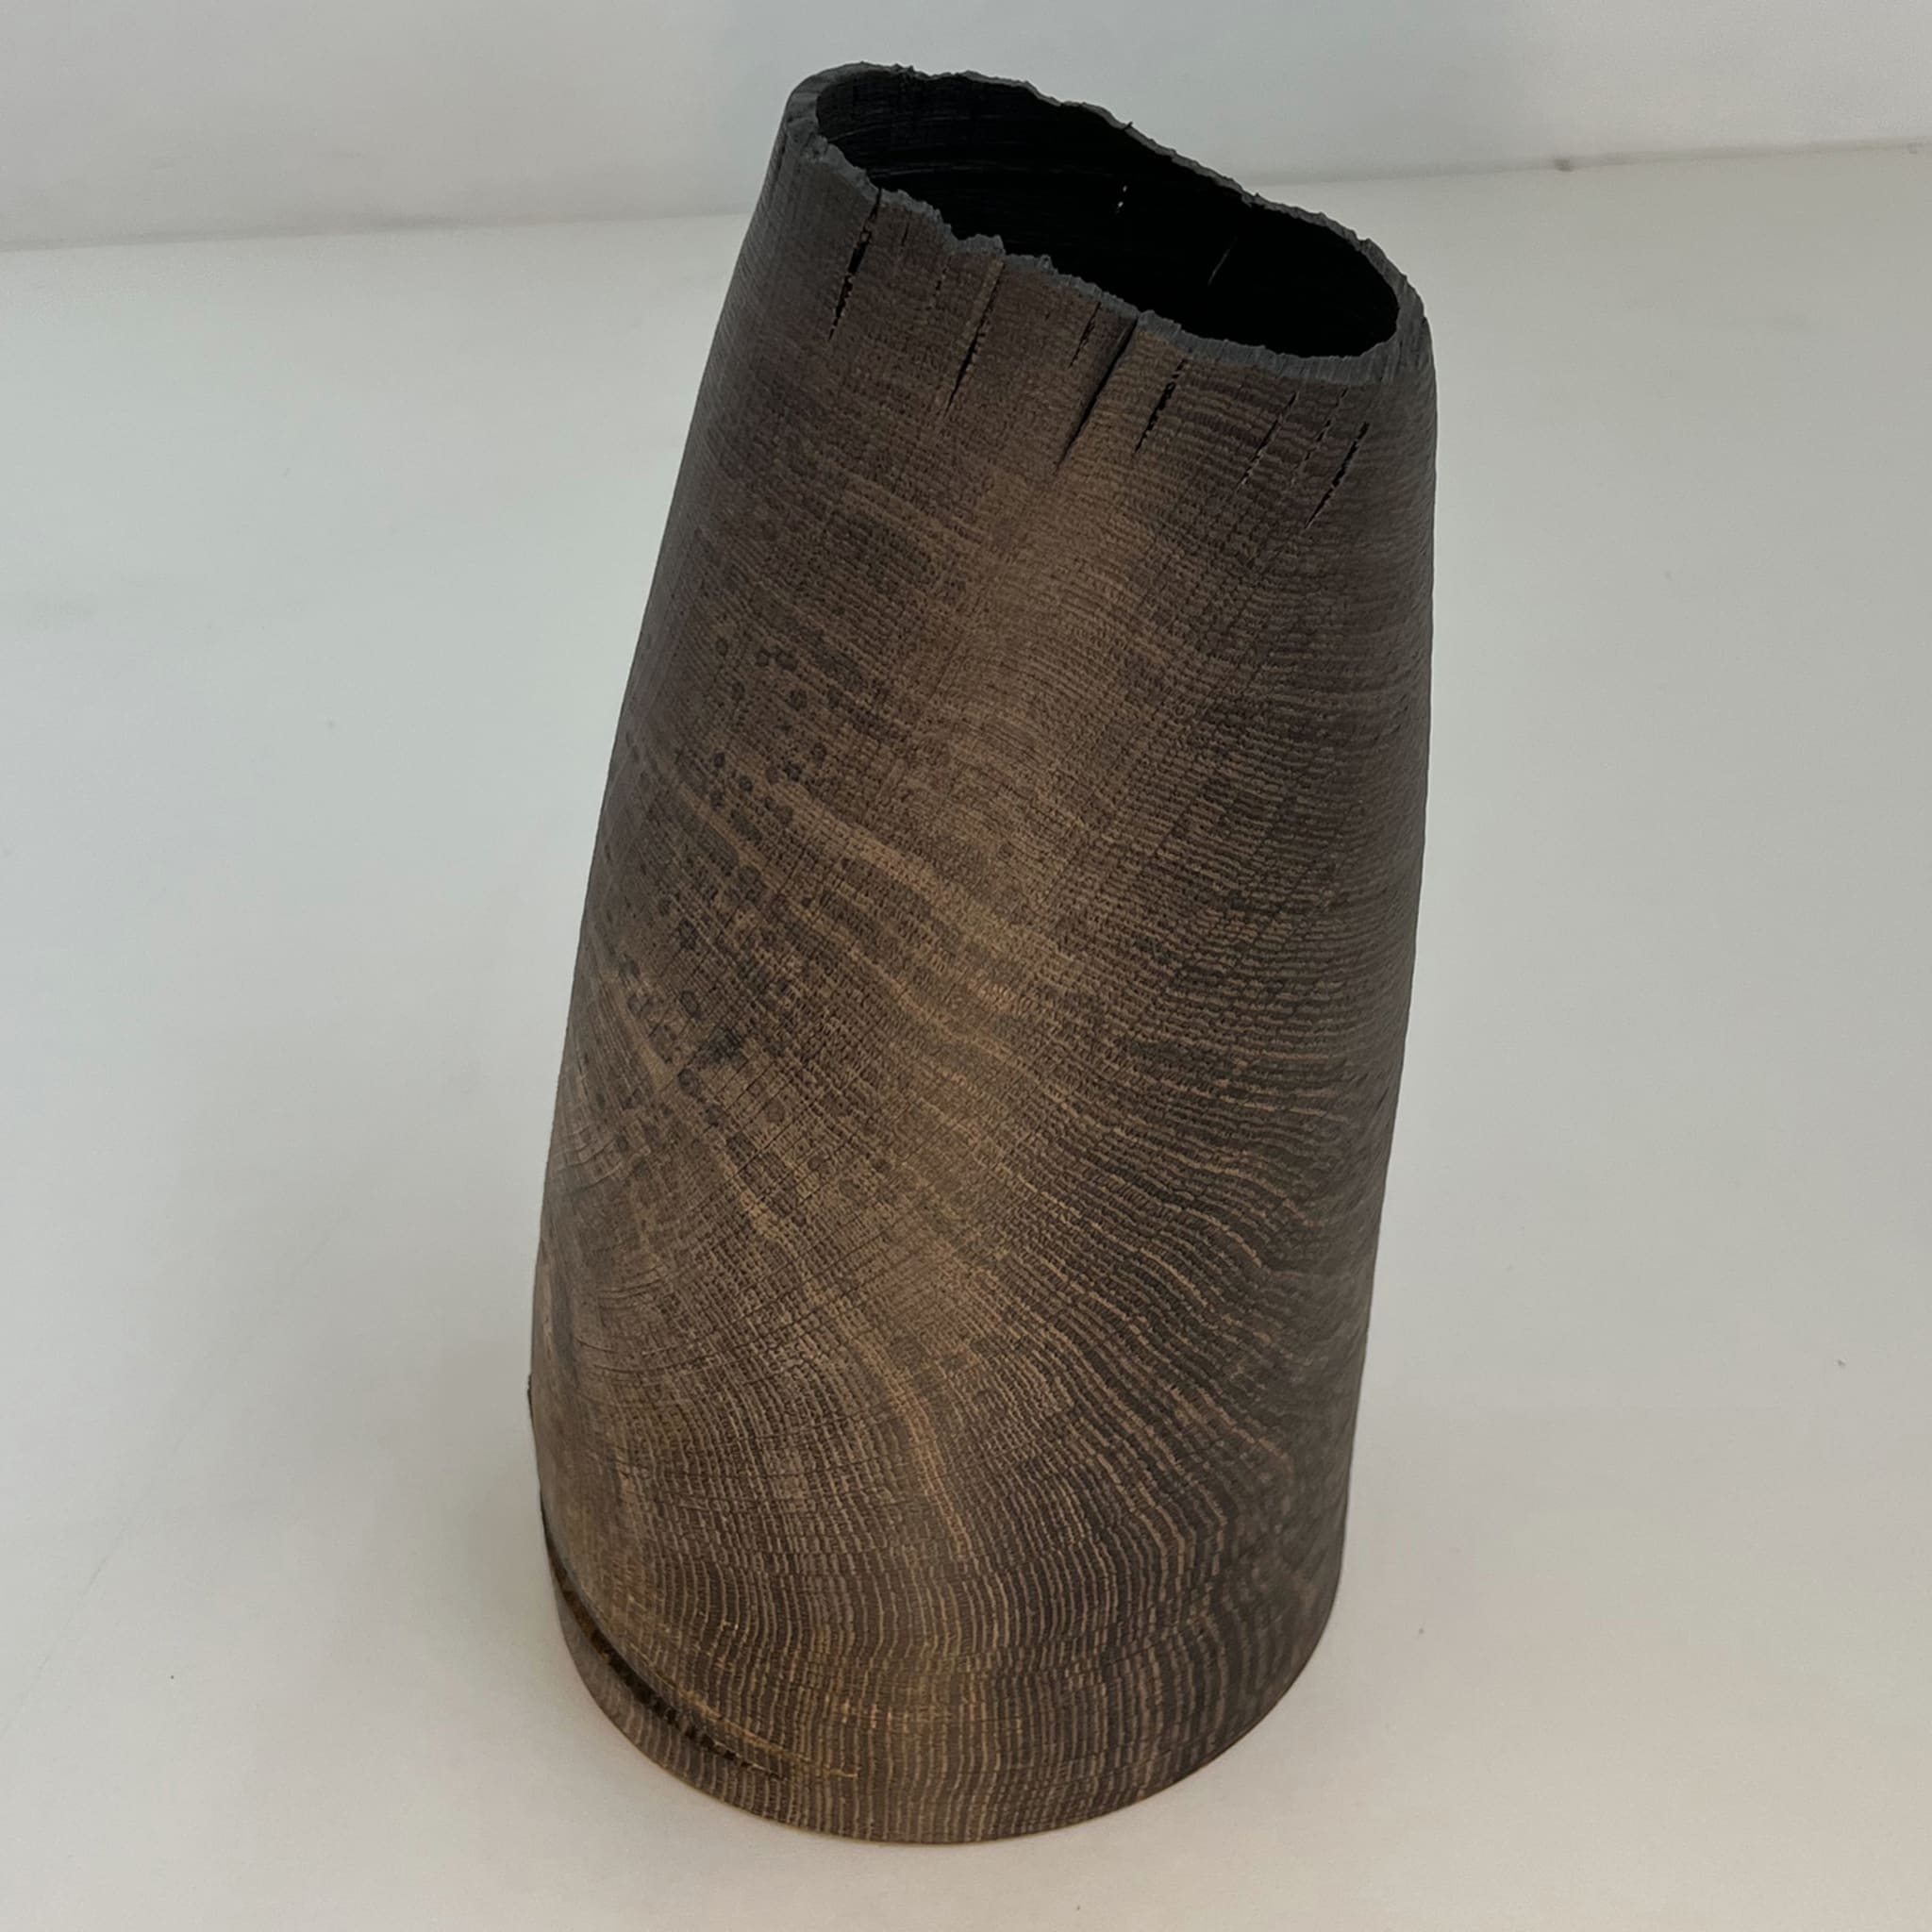 Fossil Oak Hollow Vase #2 - Alternative view 3